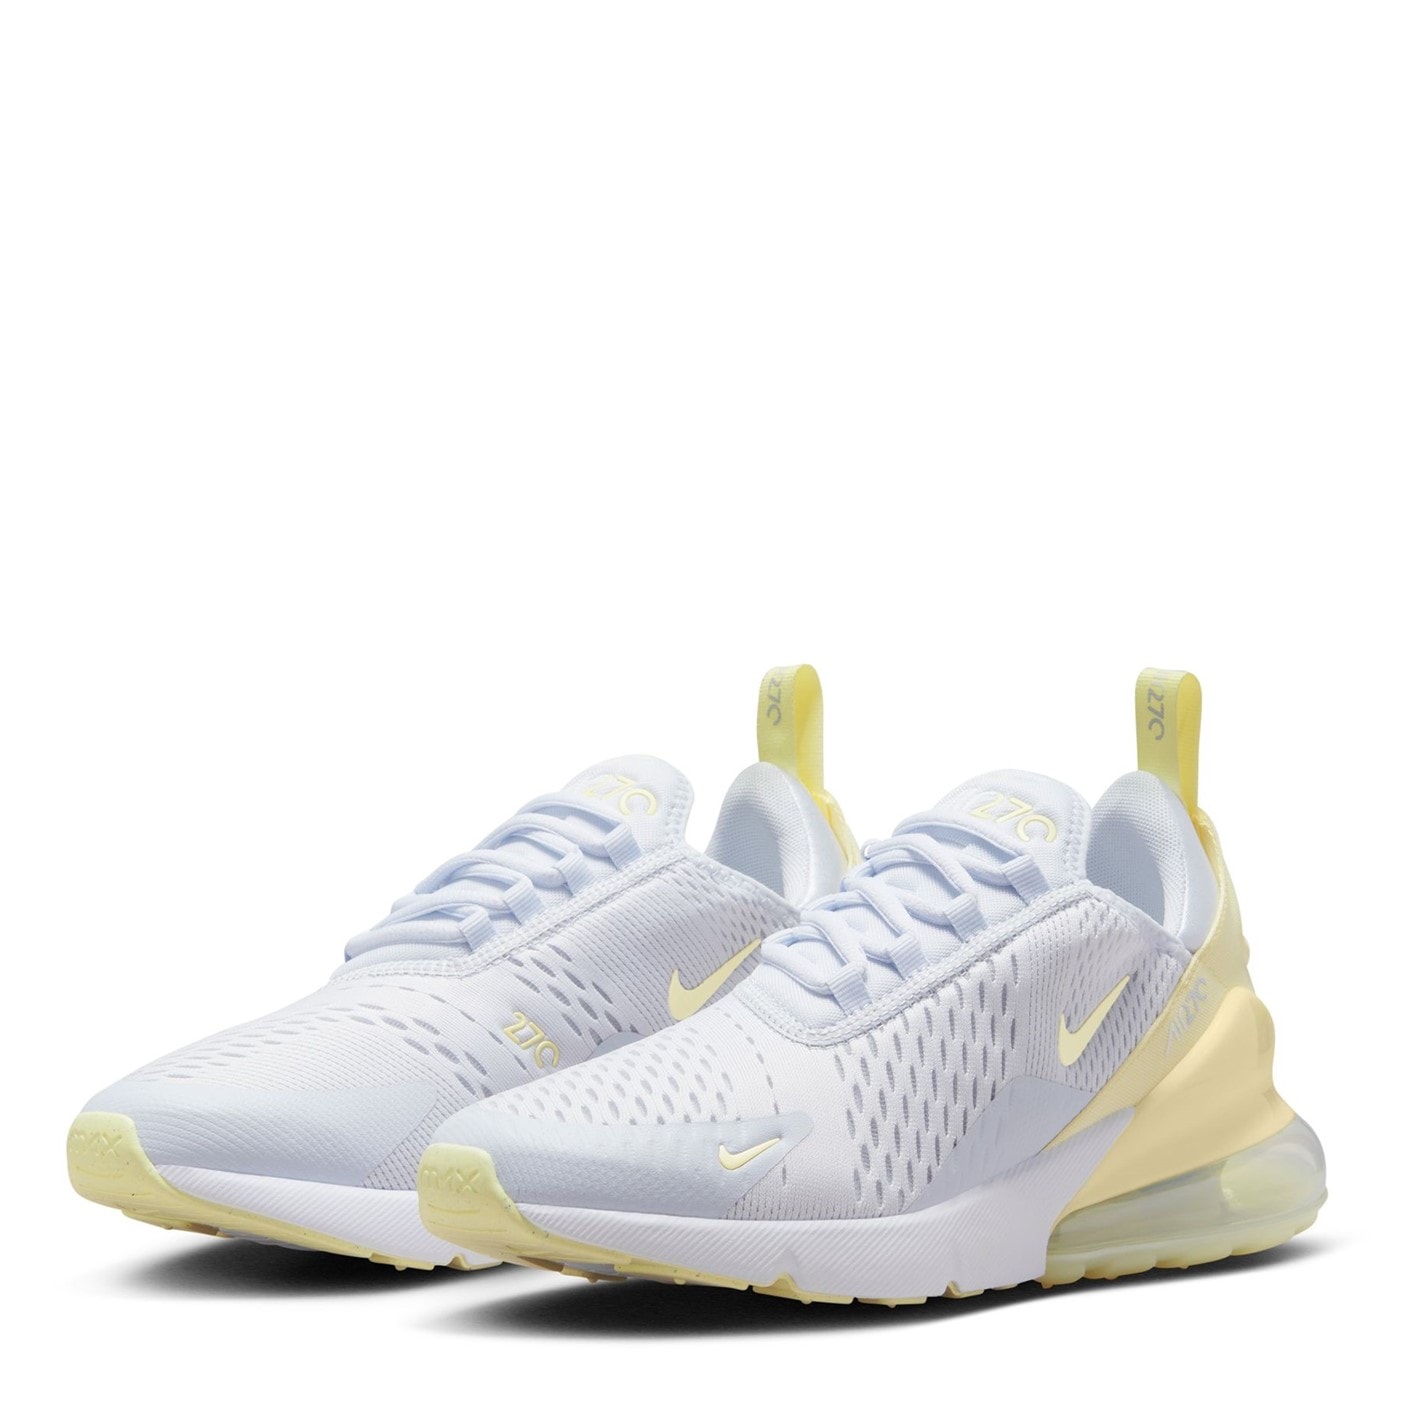 Adidasi sport Nike Air Max 270 pentru Femei alb gri galben